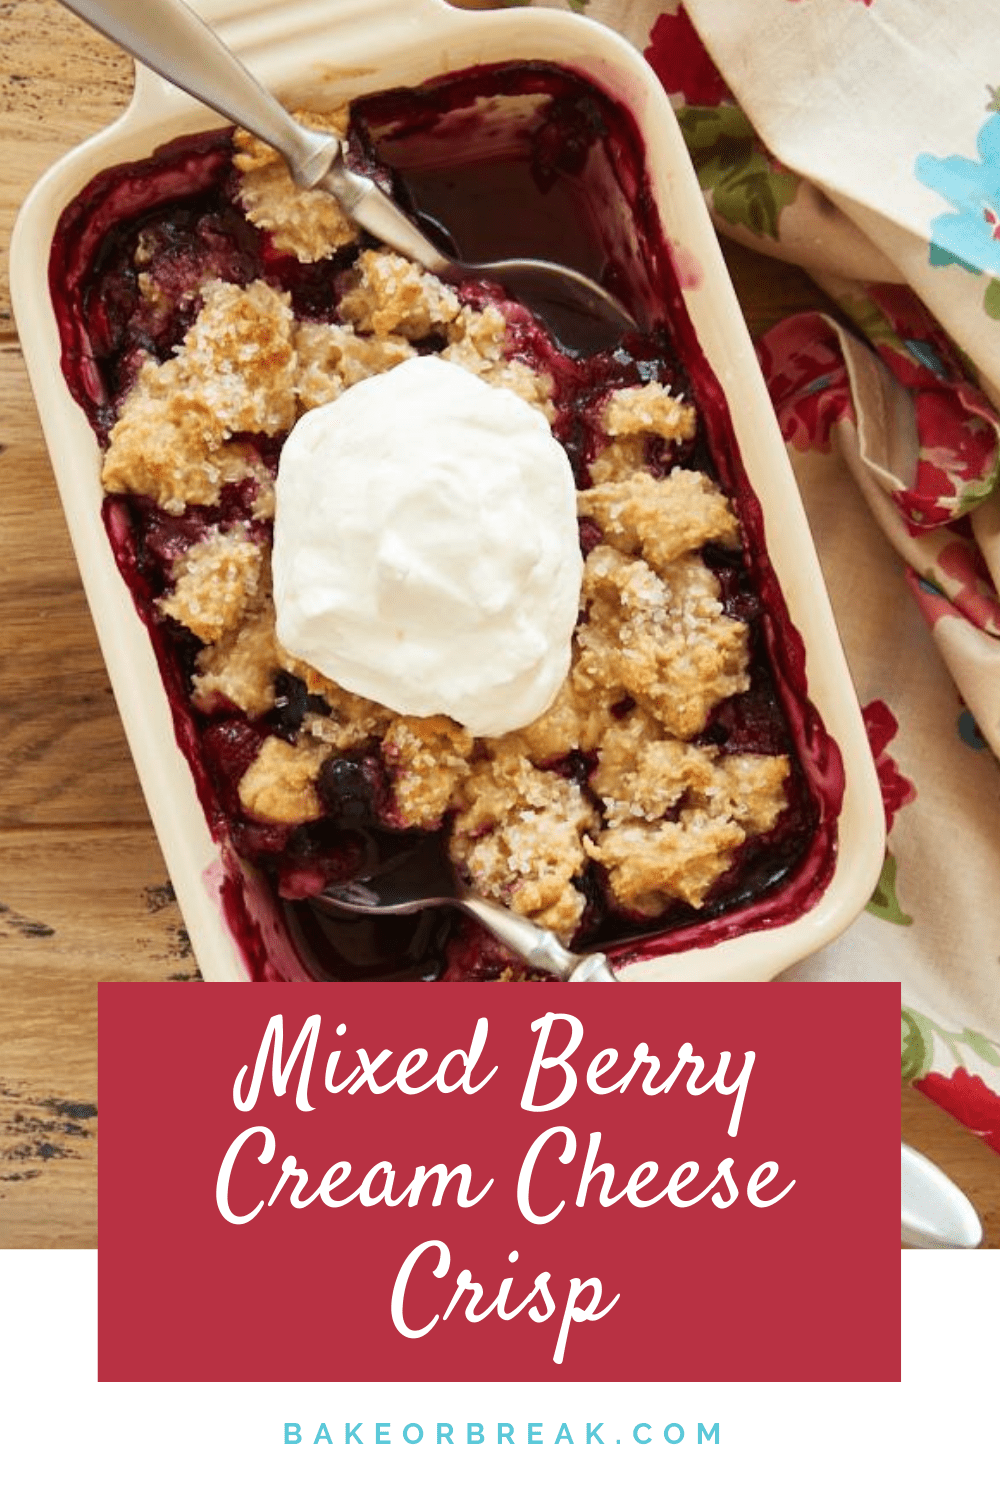 Mixed Berry Cream Cheese Crisp bakeorbreak.com